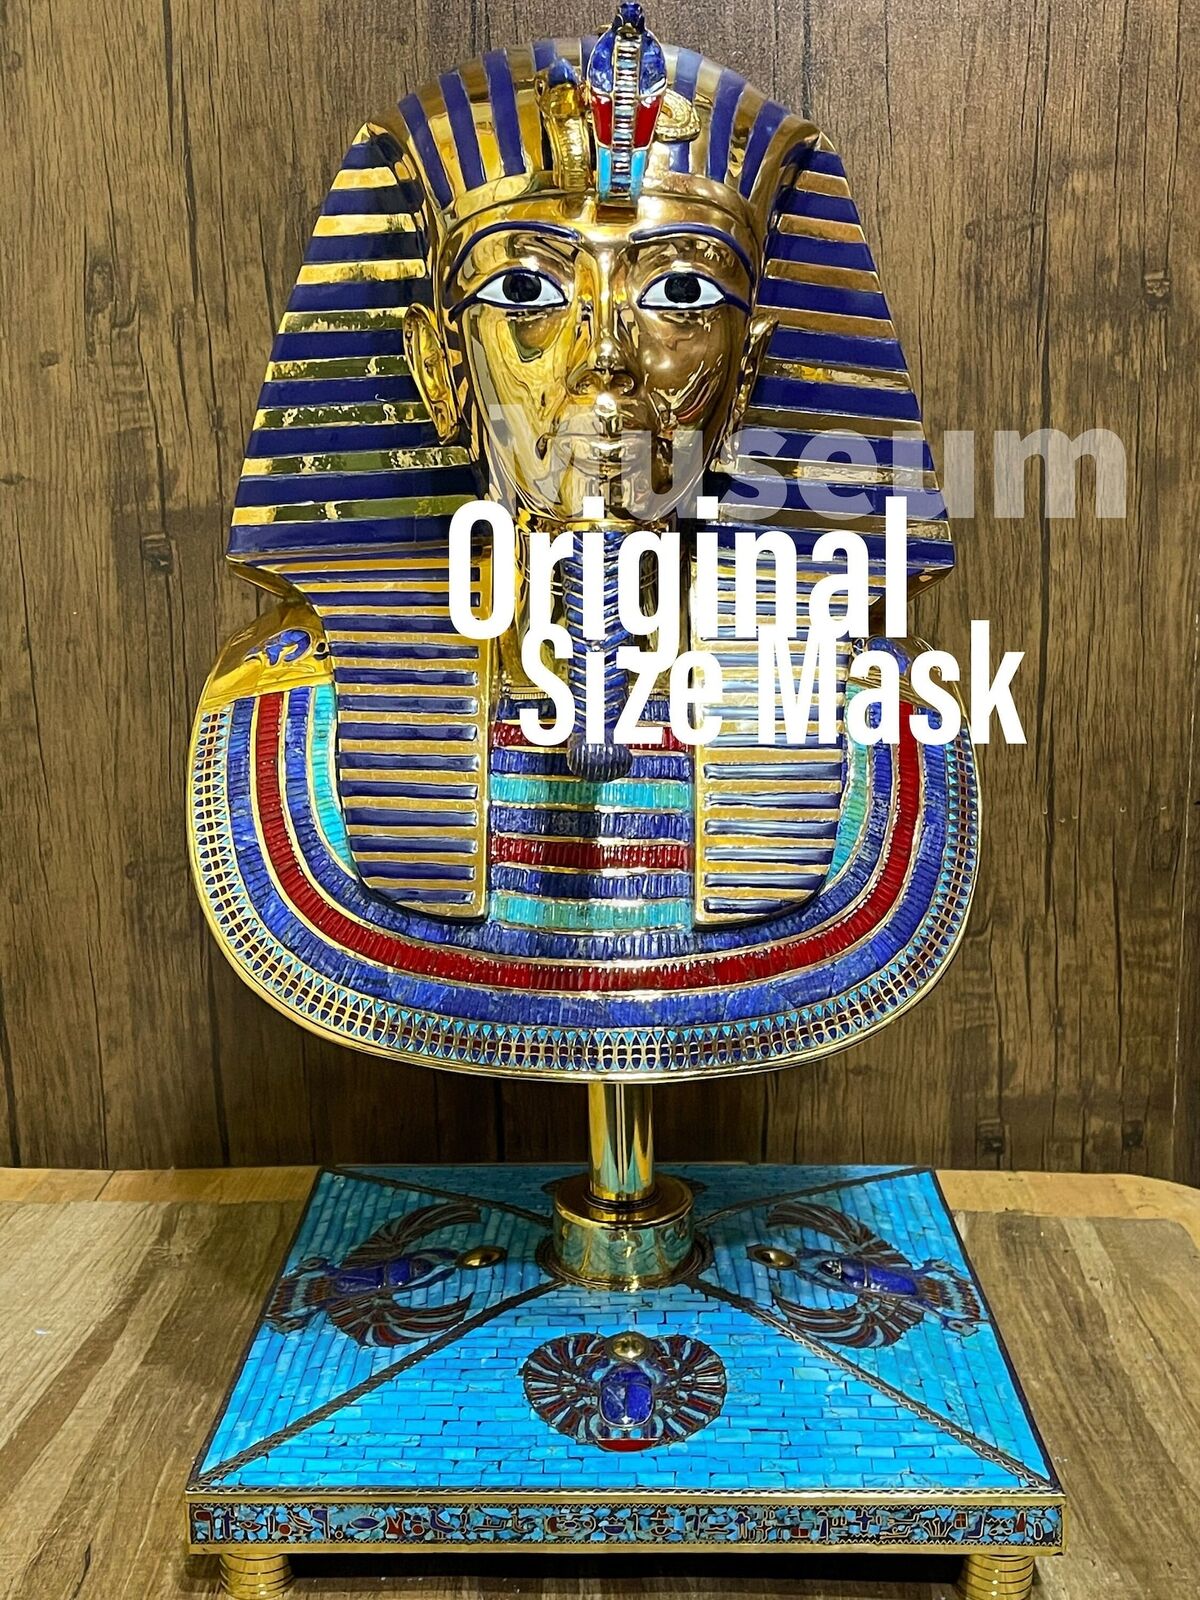 Original Size King Tutankhamun Mask, Copy Mask for King Tutankhamun